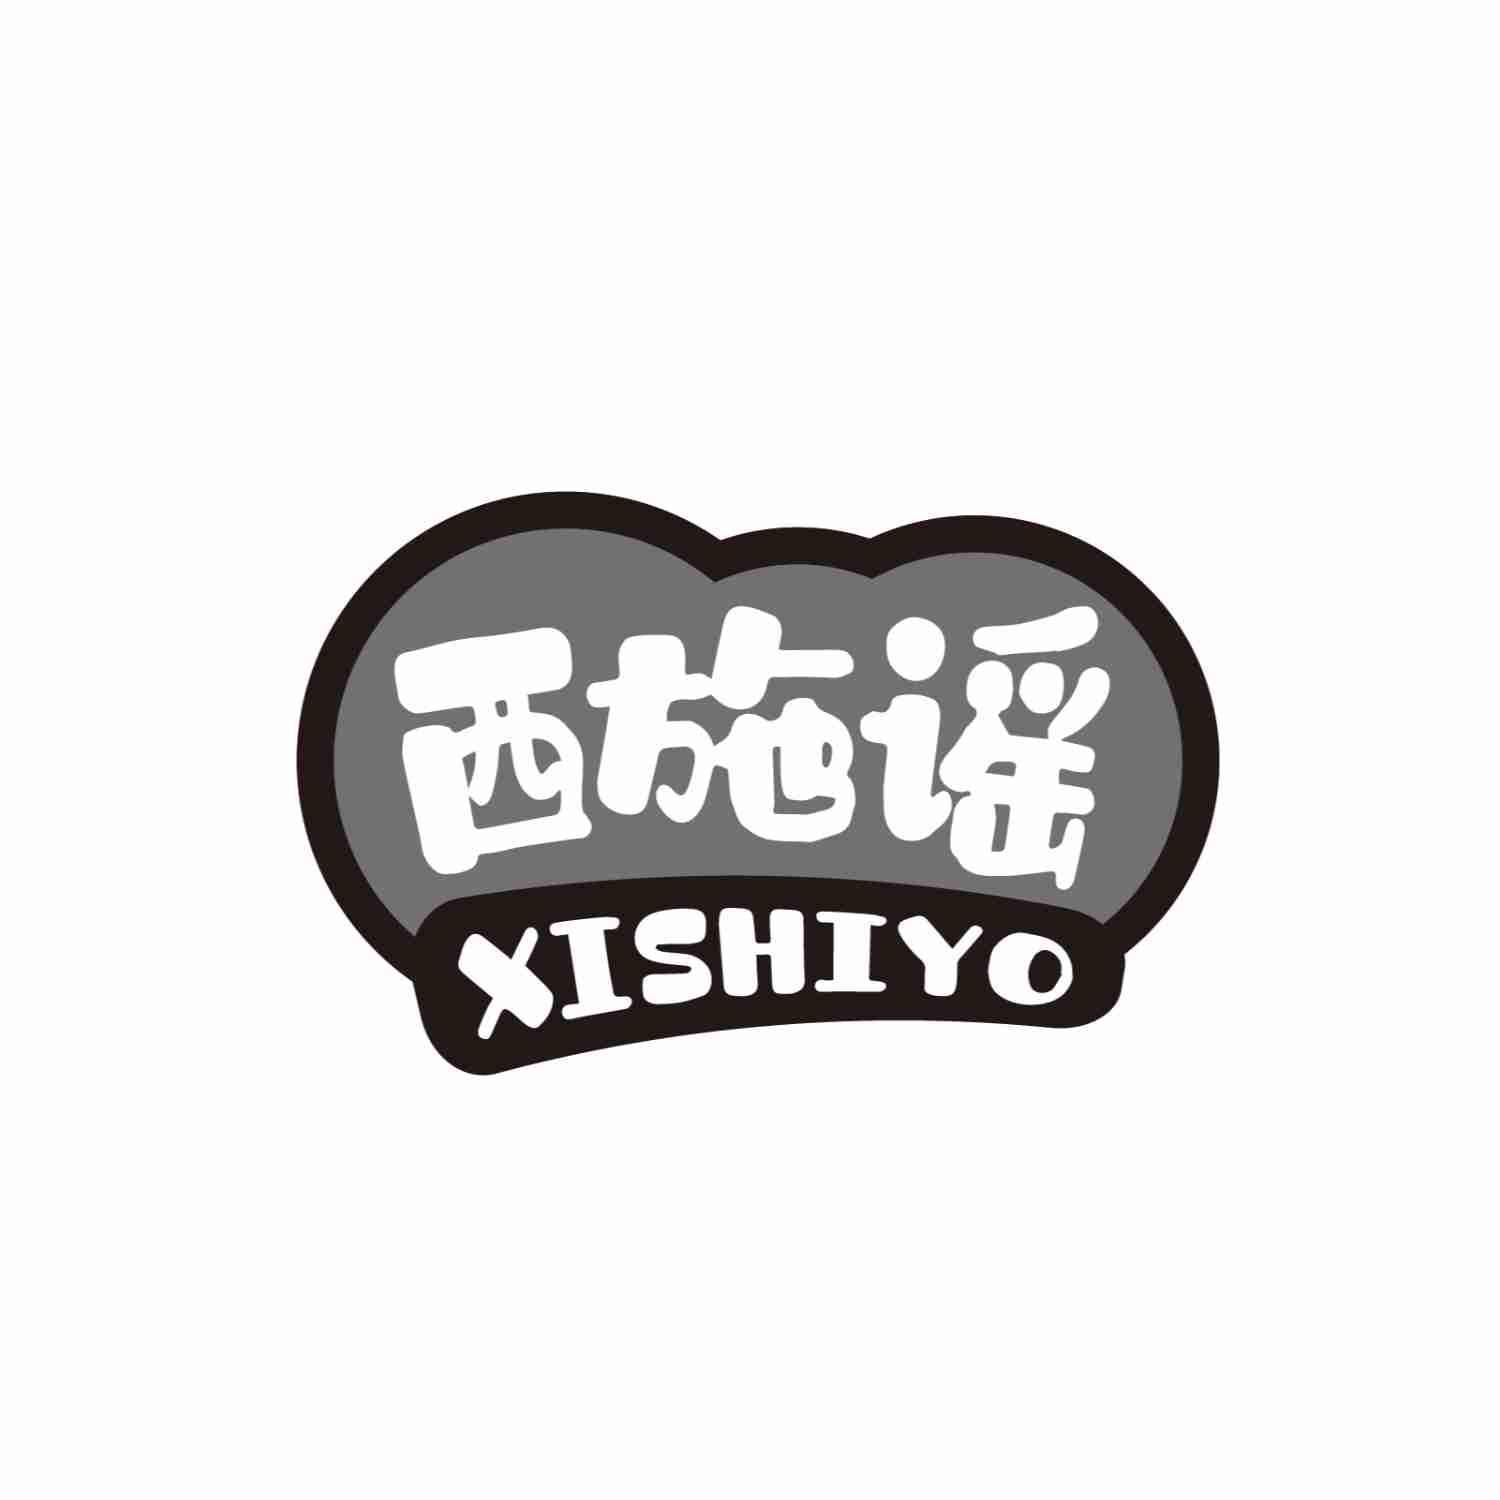 西施谣 XISHIYO 商标公告